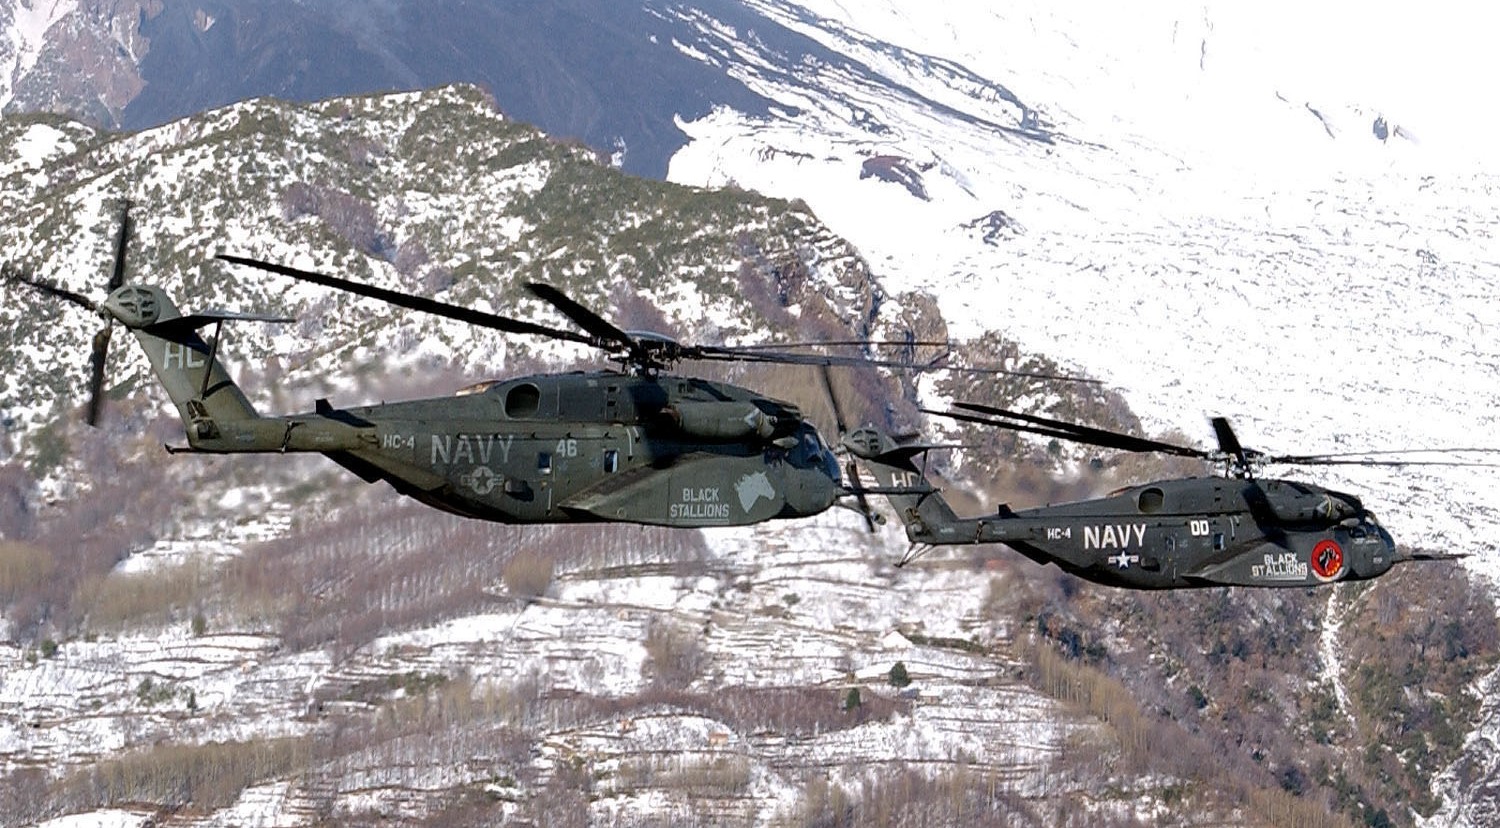 hc-4 black stallions helicopter combat support squadron mh-53e sea dragon 06